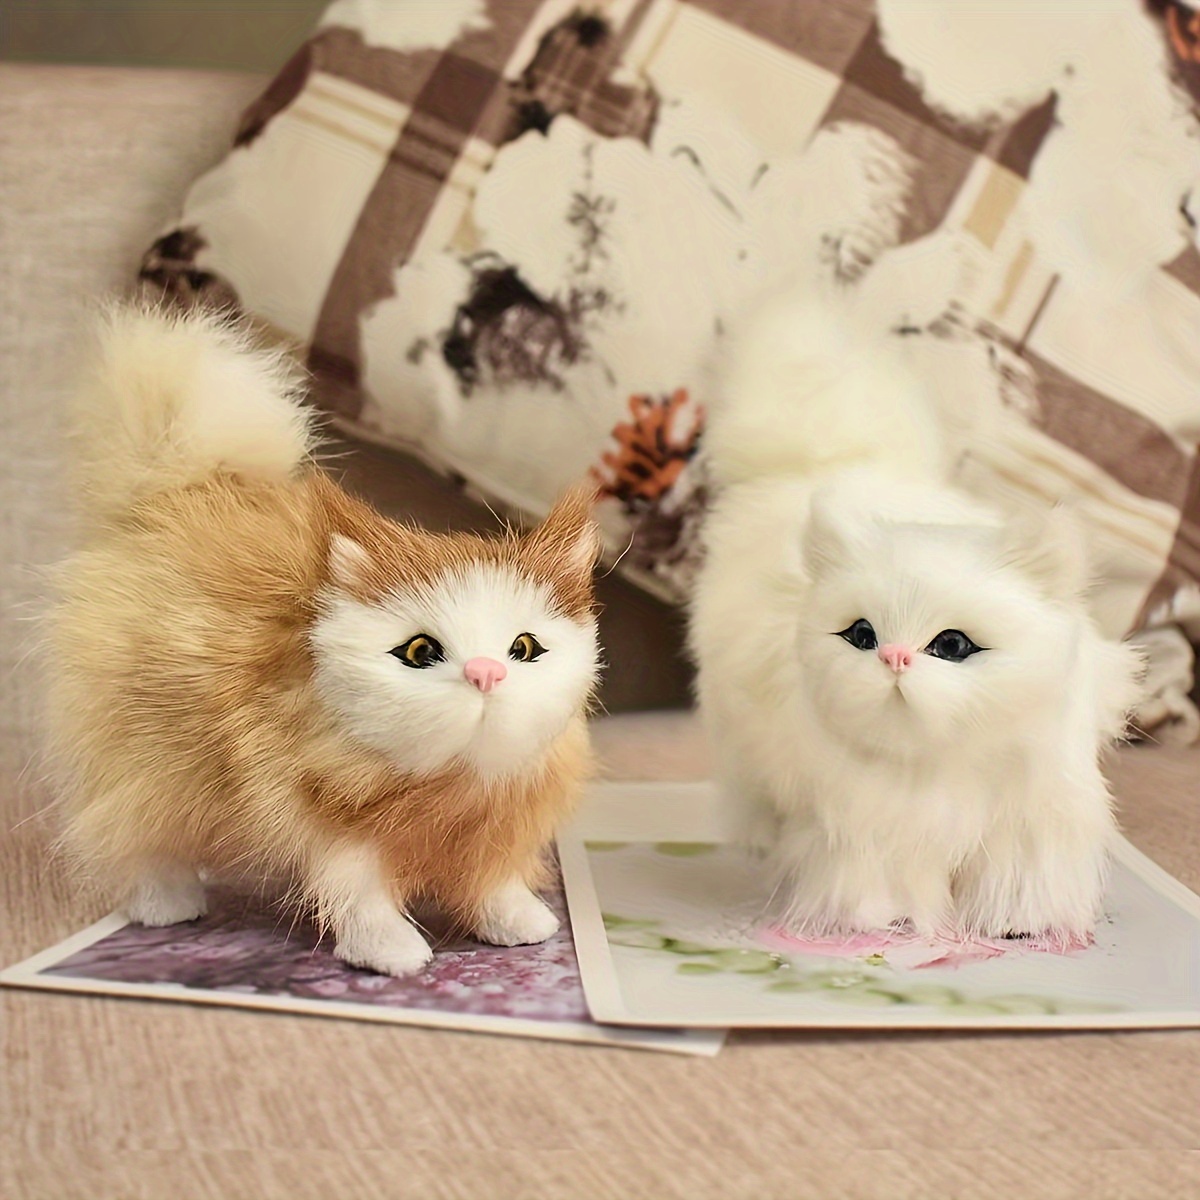 

Adorable Simulation Cat Plush Toys - Soft Stuffed Kitten Model - Perfect Gift For Kids & Girls On Birthdays & Valentine's Day!